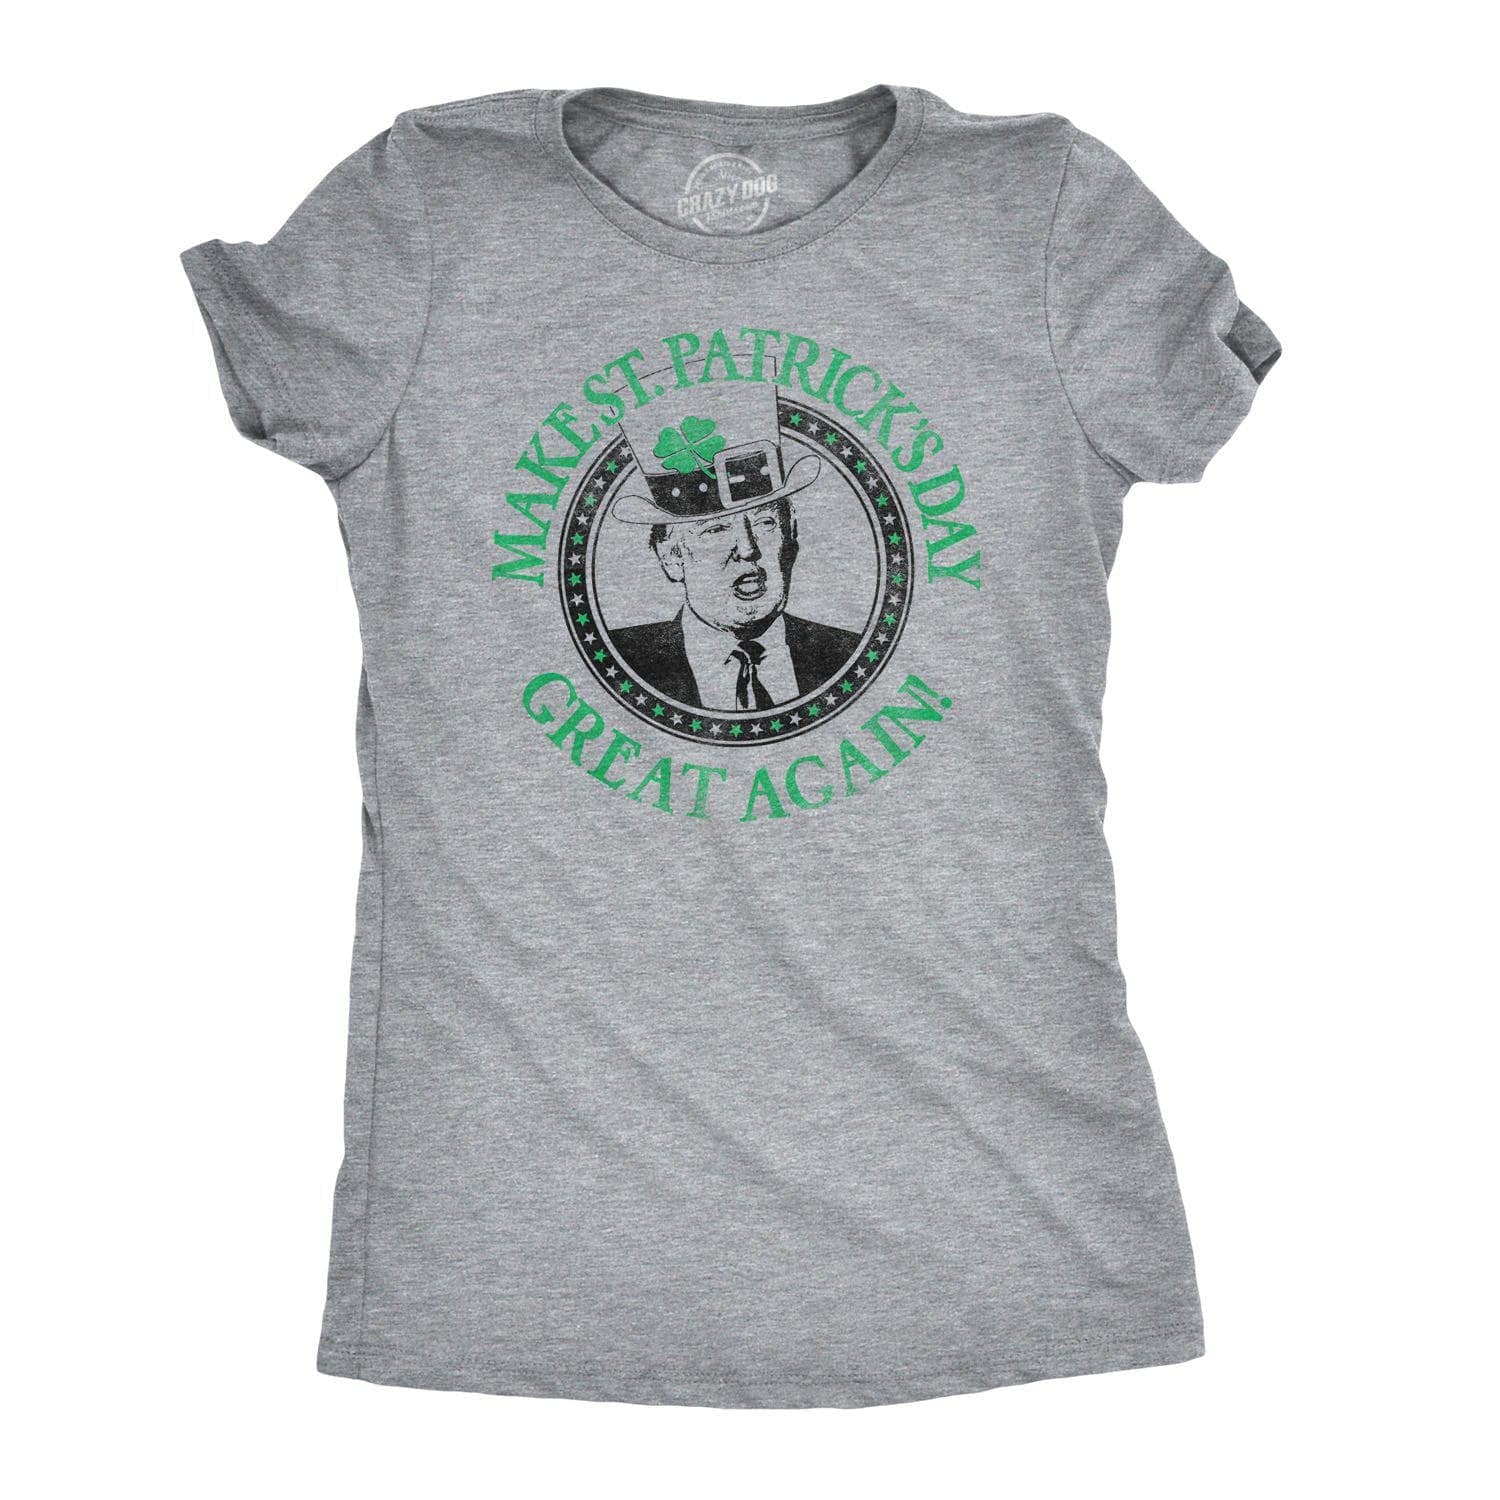 Make St. Patrick’s Day Great Again Women's Tshirt  -  Crazy Dog T-Shirts